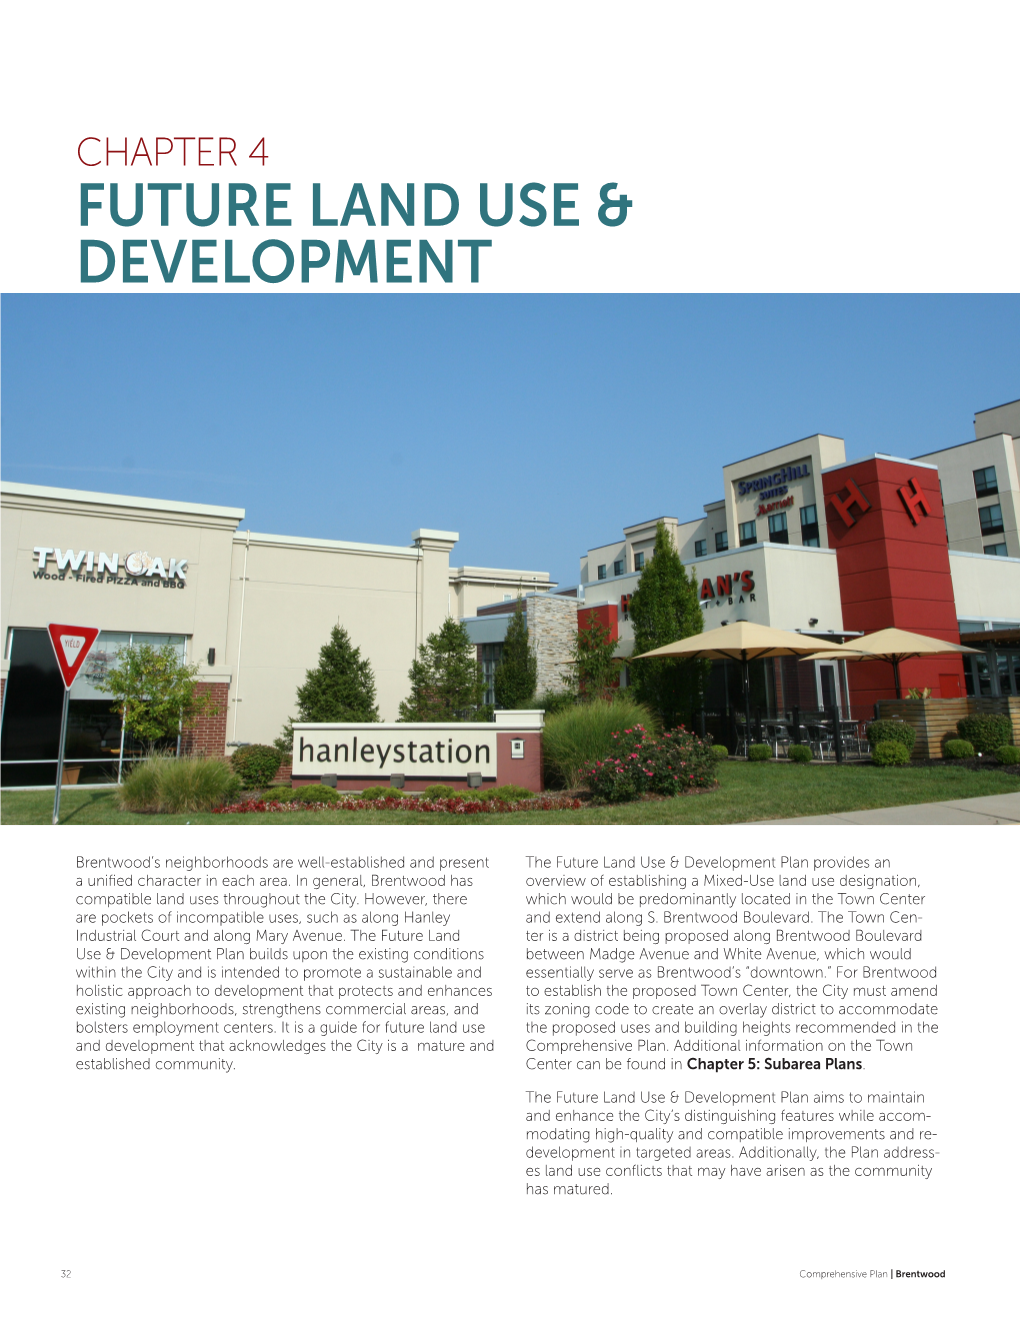 Future Land Use & Development